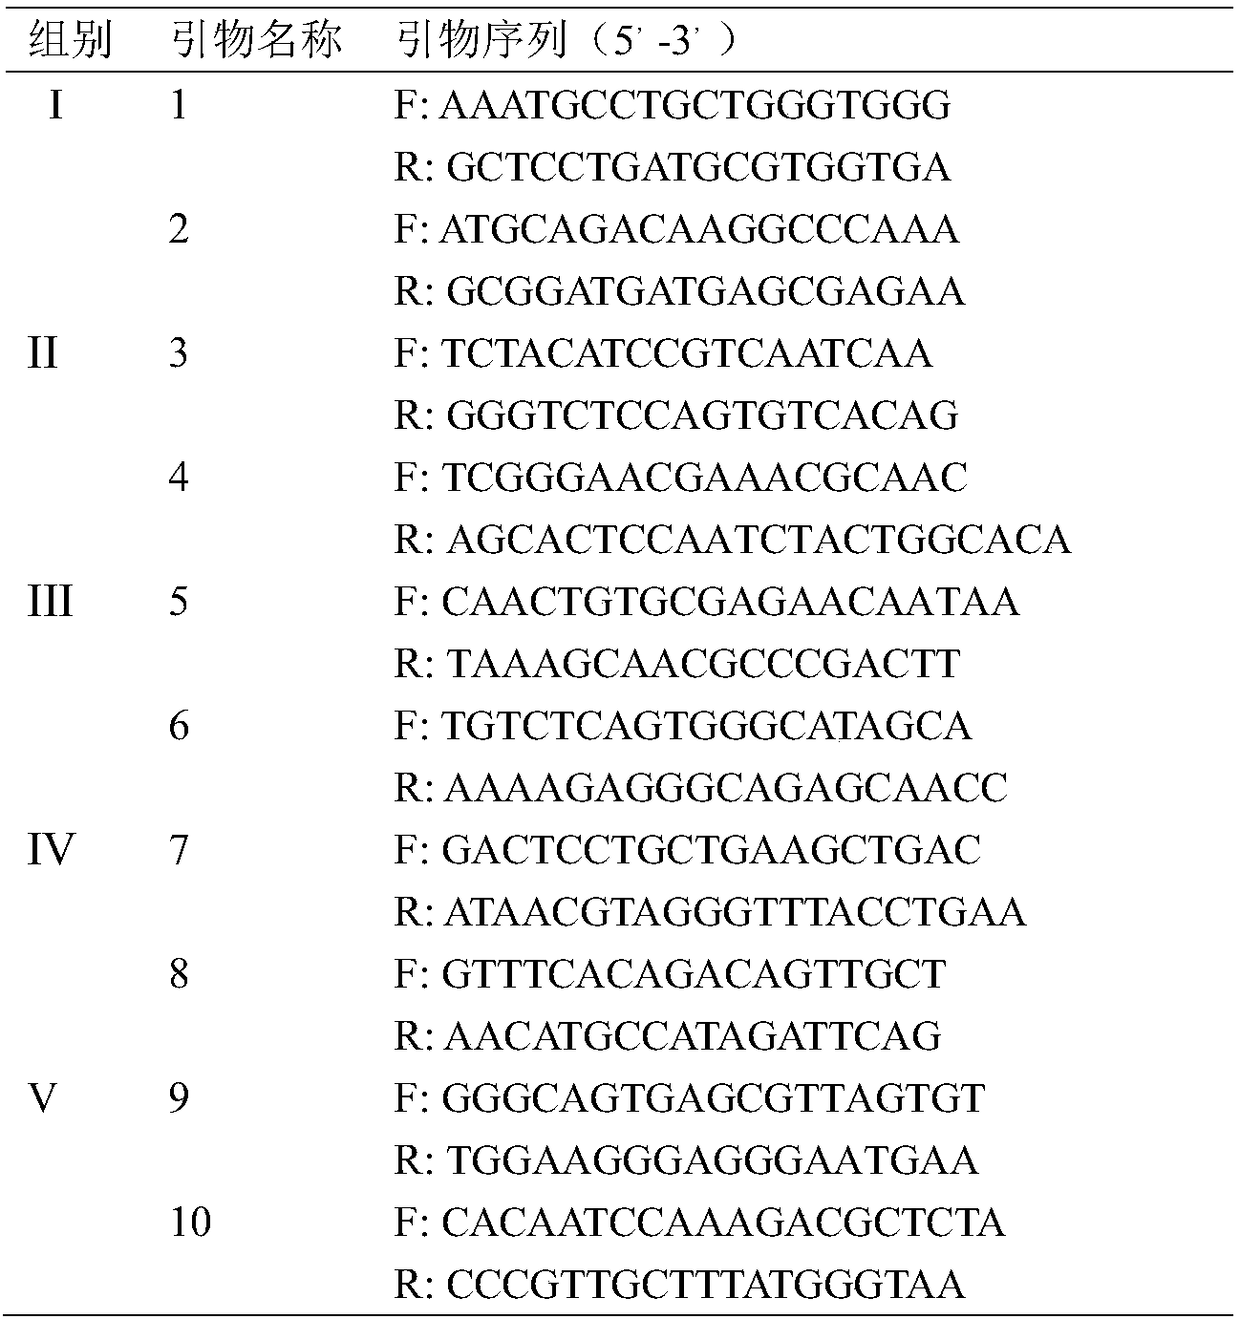 Duplex PCR method for identifying genetic relationship of black carp